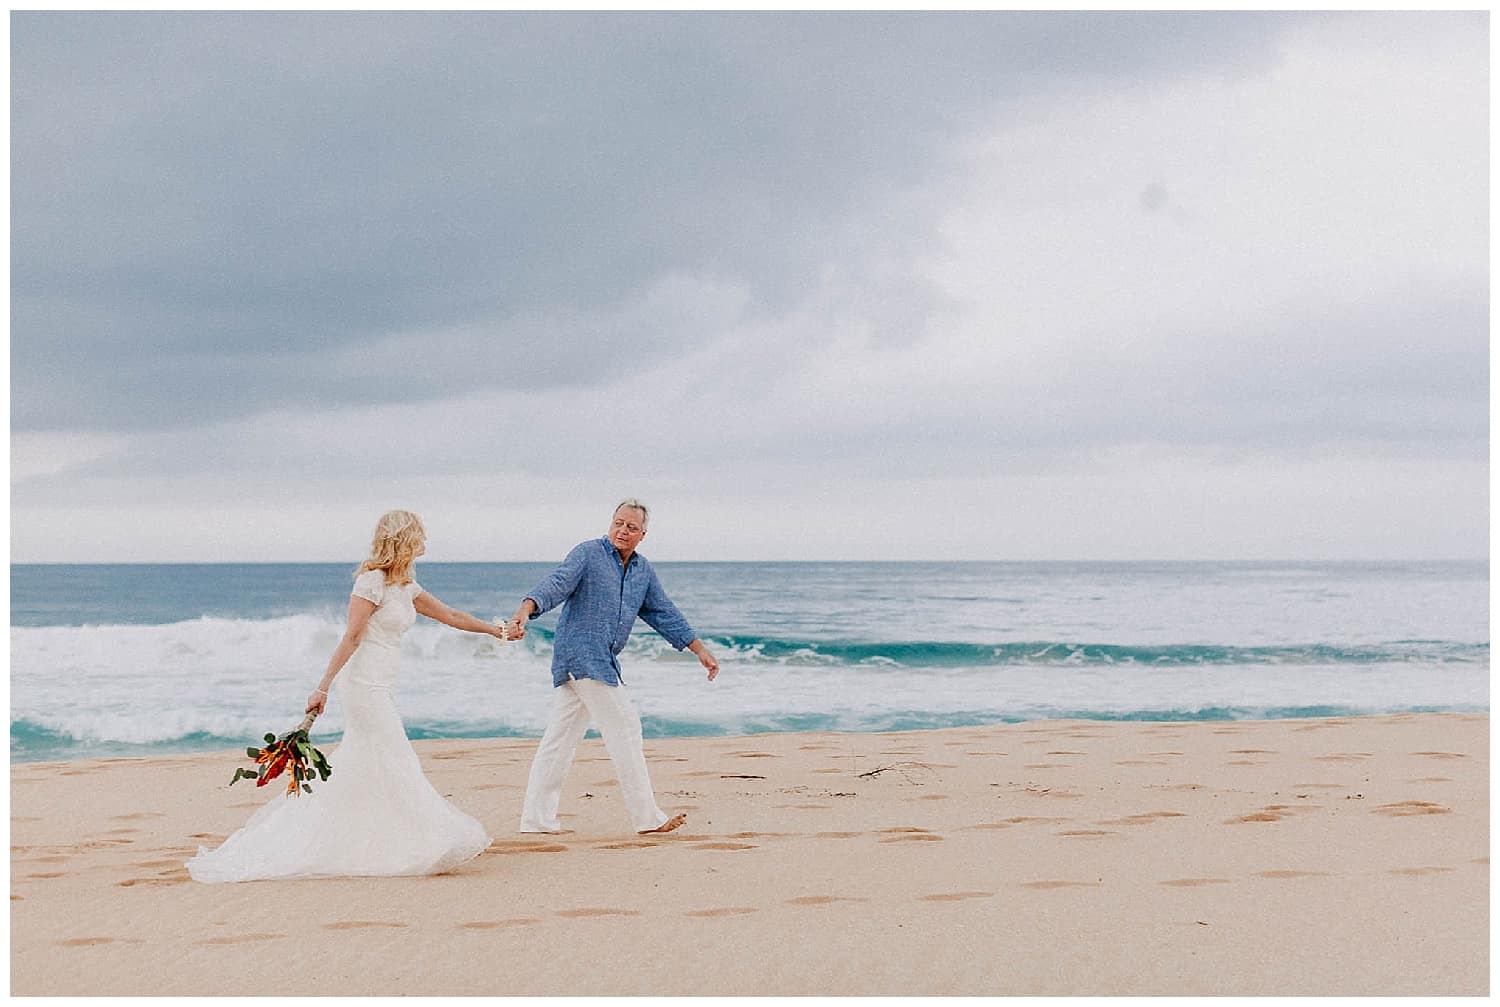 Intimate Molokai wedding by Hawaii wedding photographer Kyle Goldie of Luma Weddings